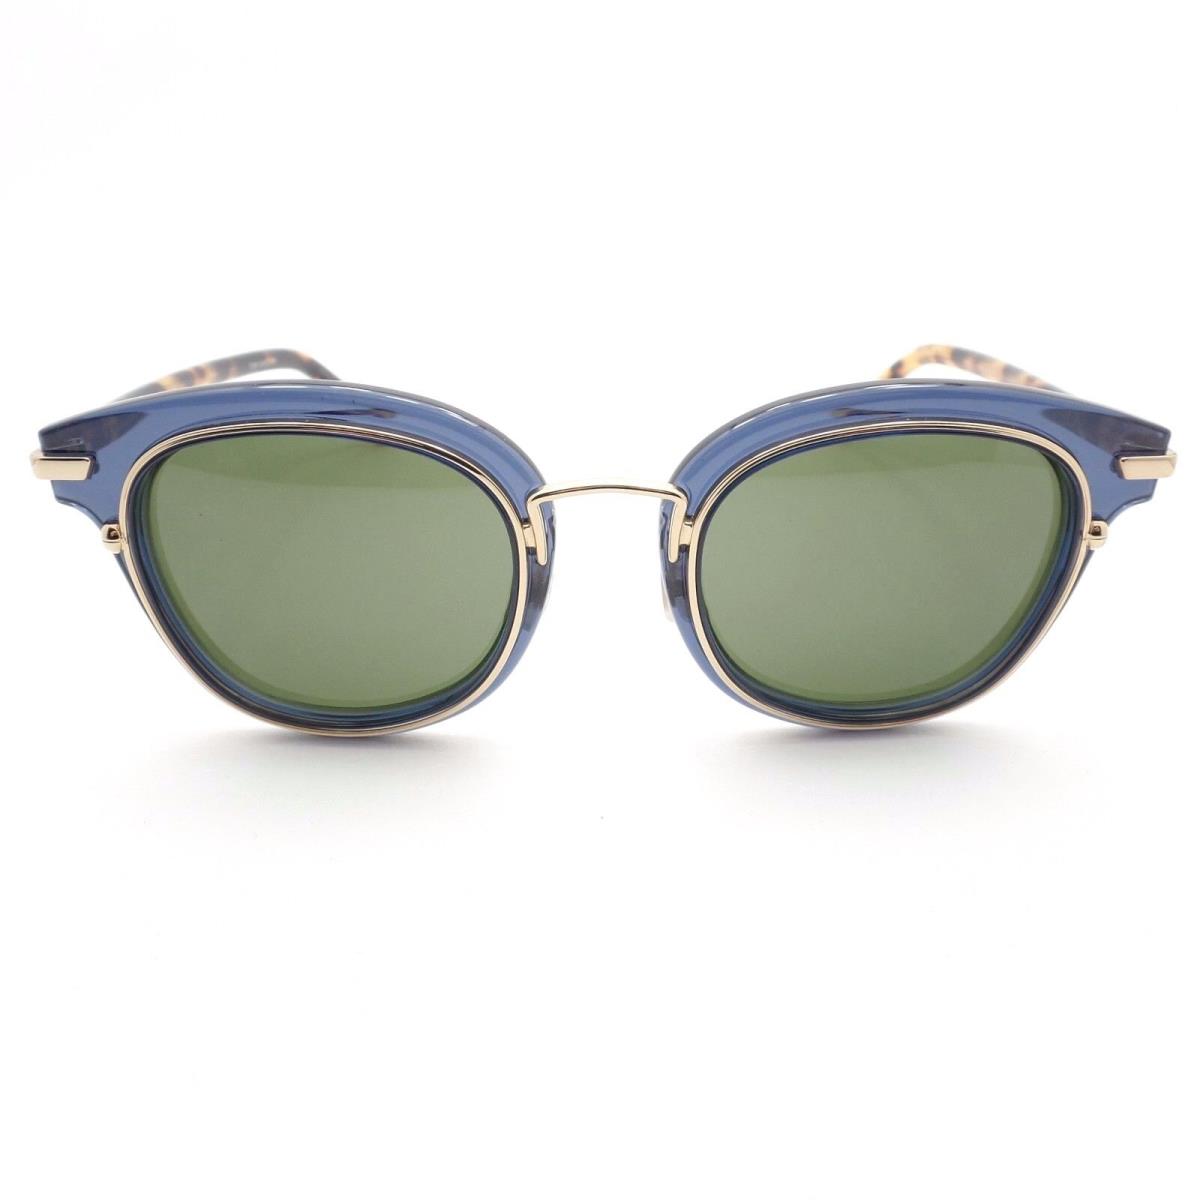 Christian Dior Origins 2 Pjpqt Blue Gold Green Sunglasses